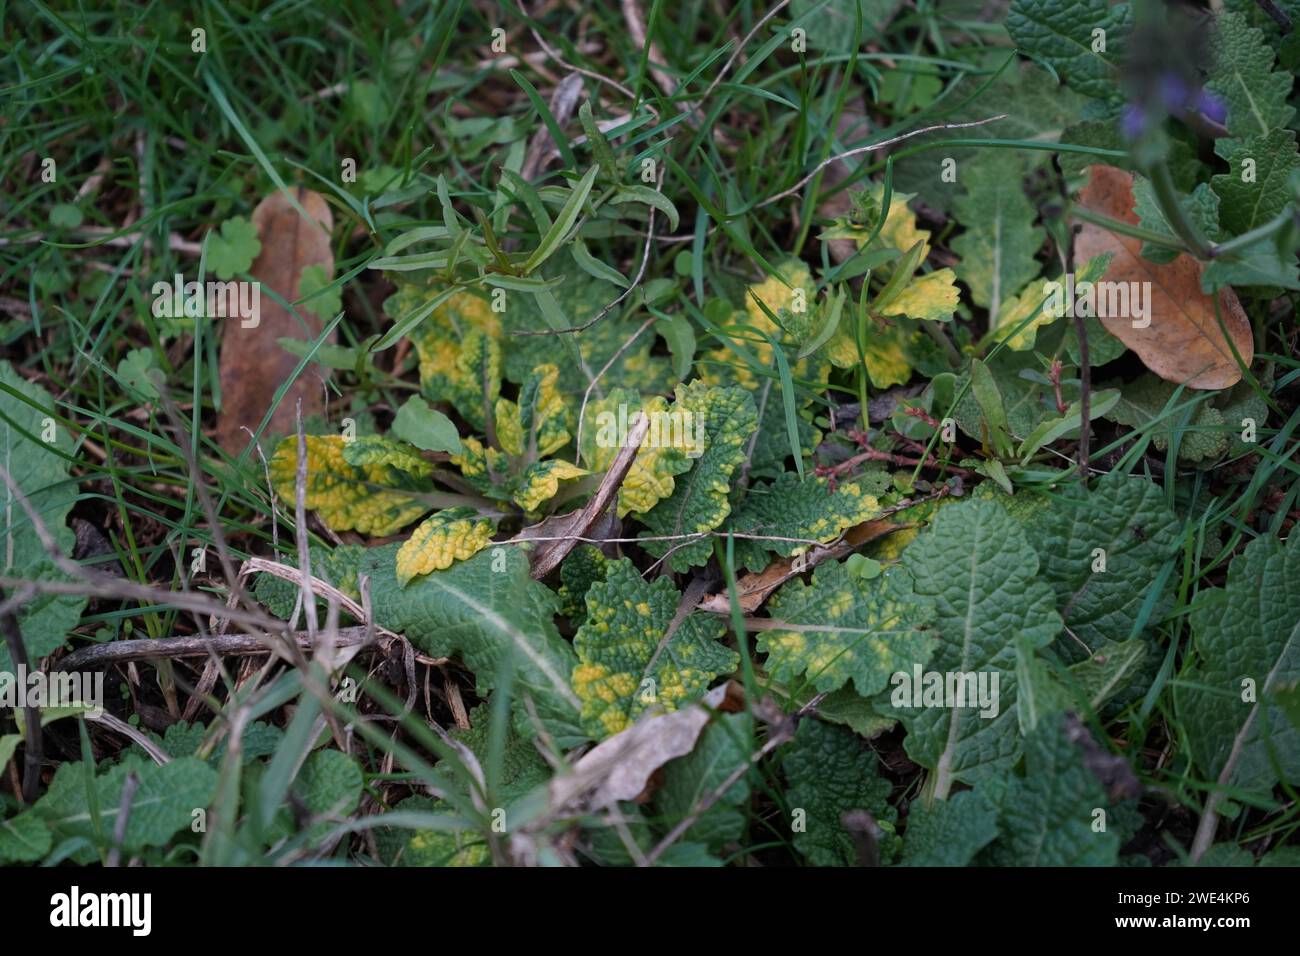 Sage, Wand sage, southern meadow sage(Salvia virgata) Stock Photo